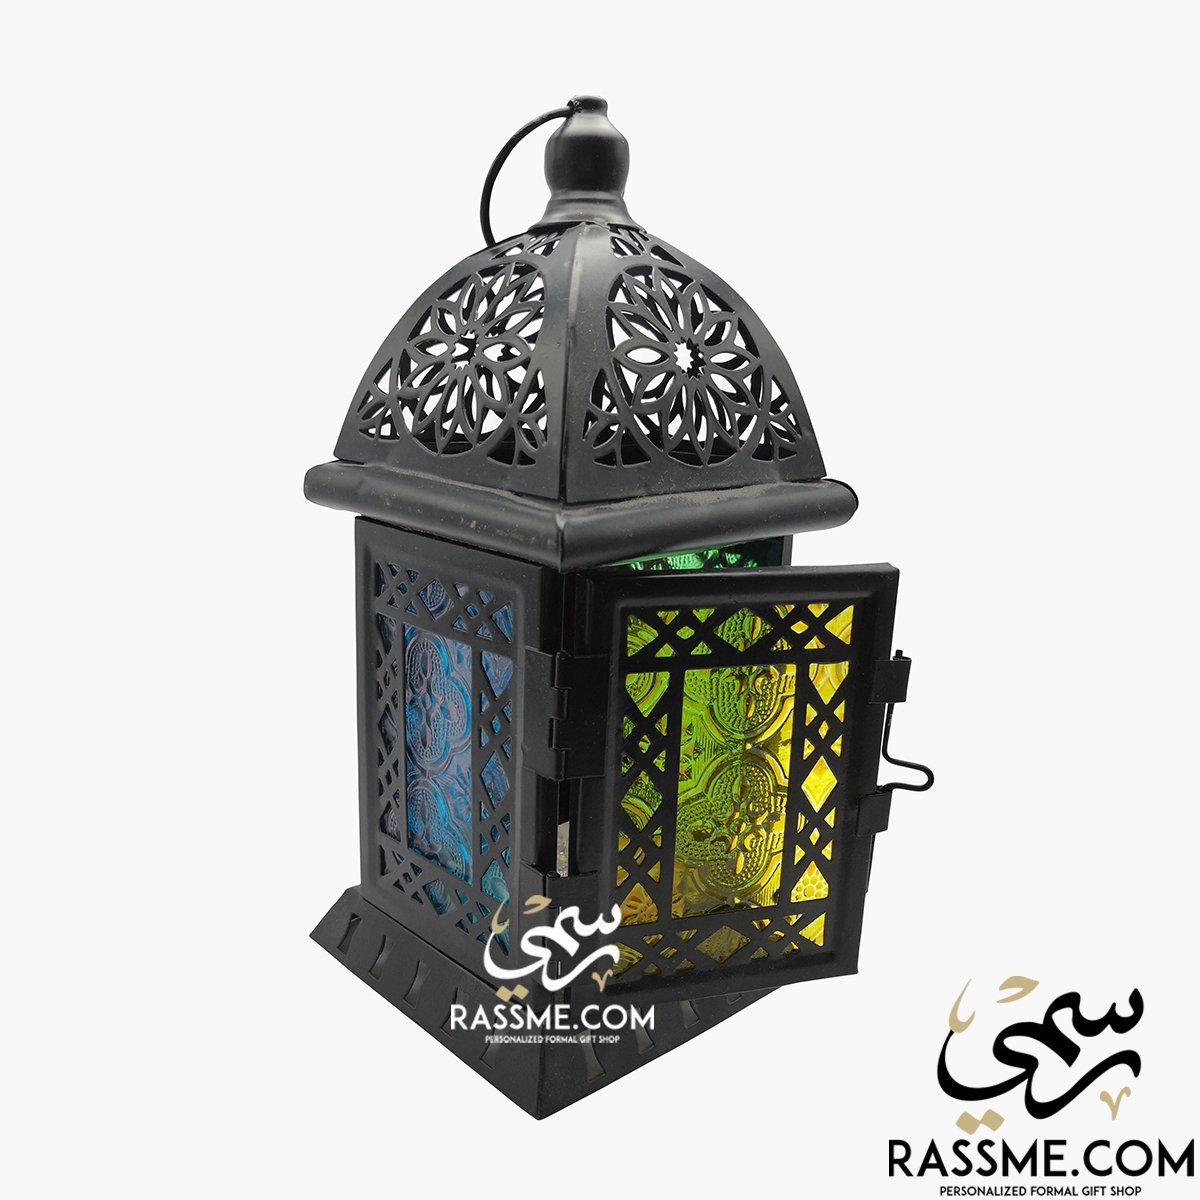 Candle House Arabian Glass Lantern Desk